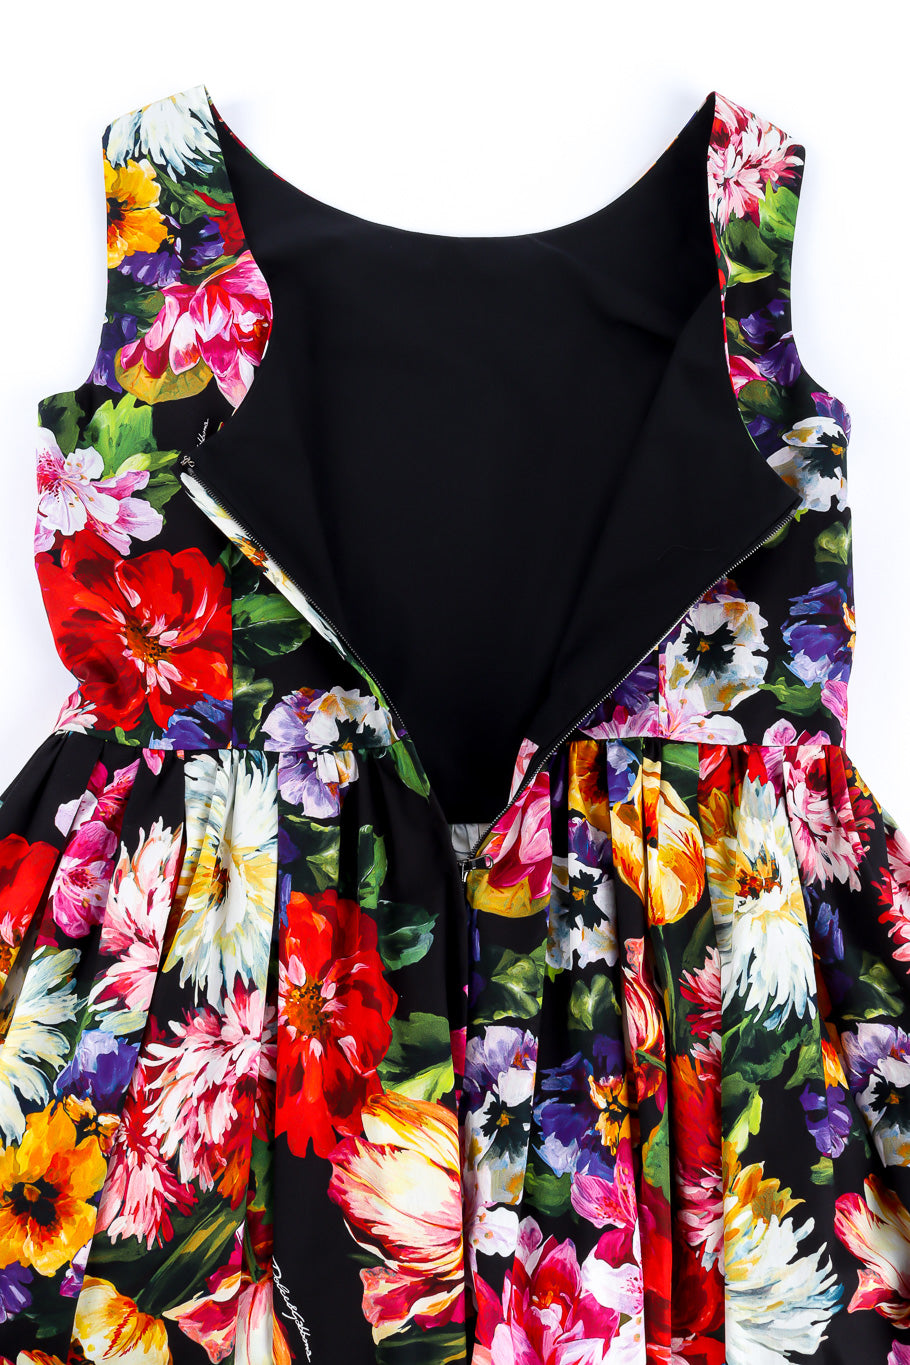 Dolce & Gabbana floral tea dress back zipper and lining details @recessla